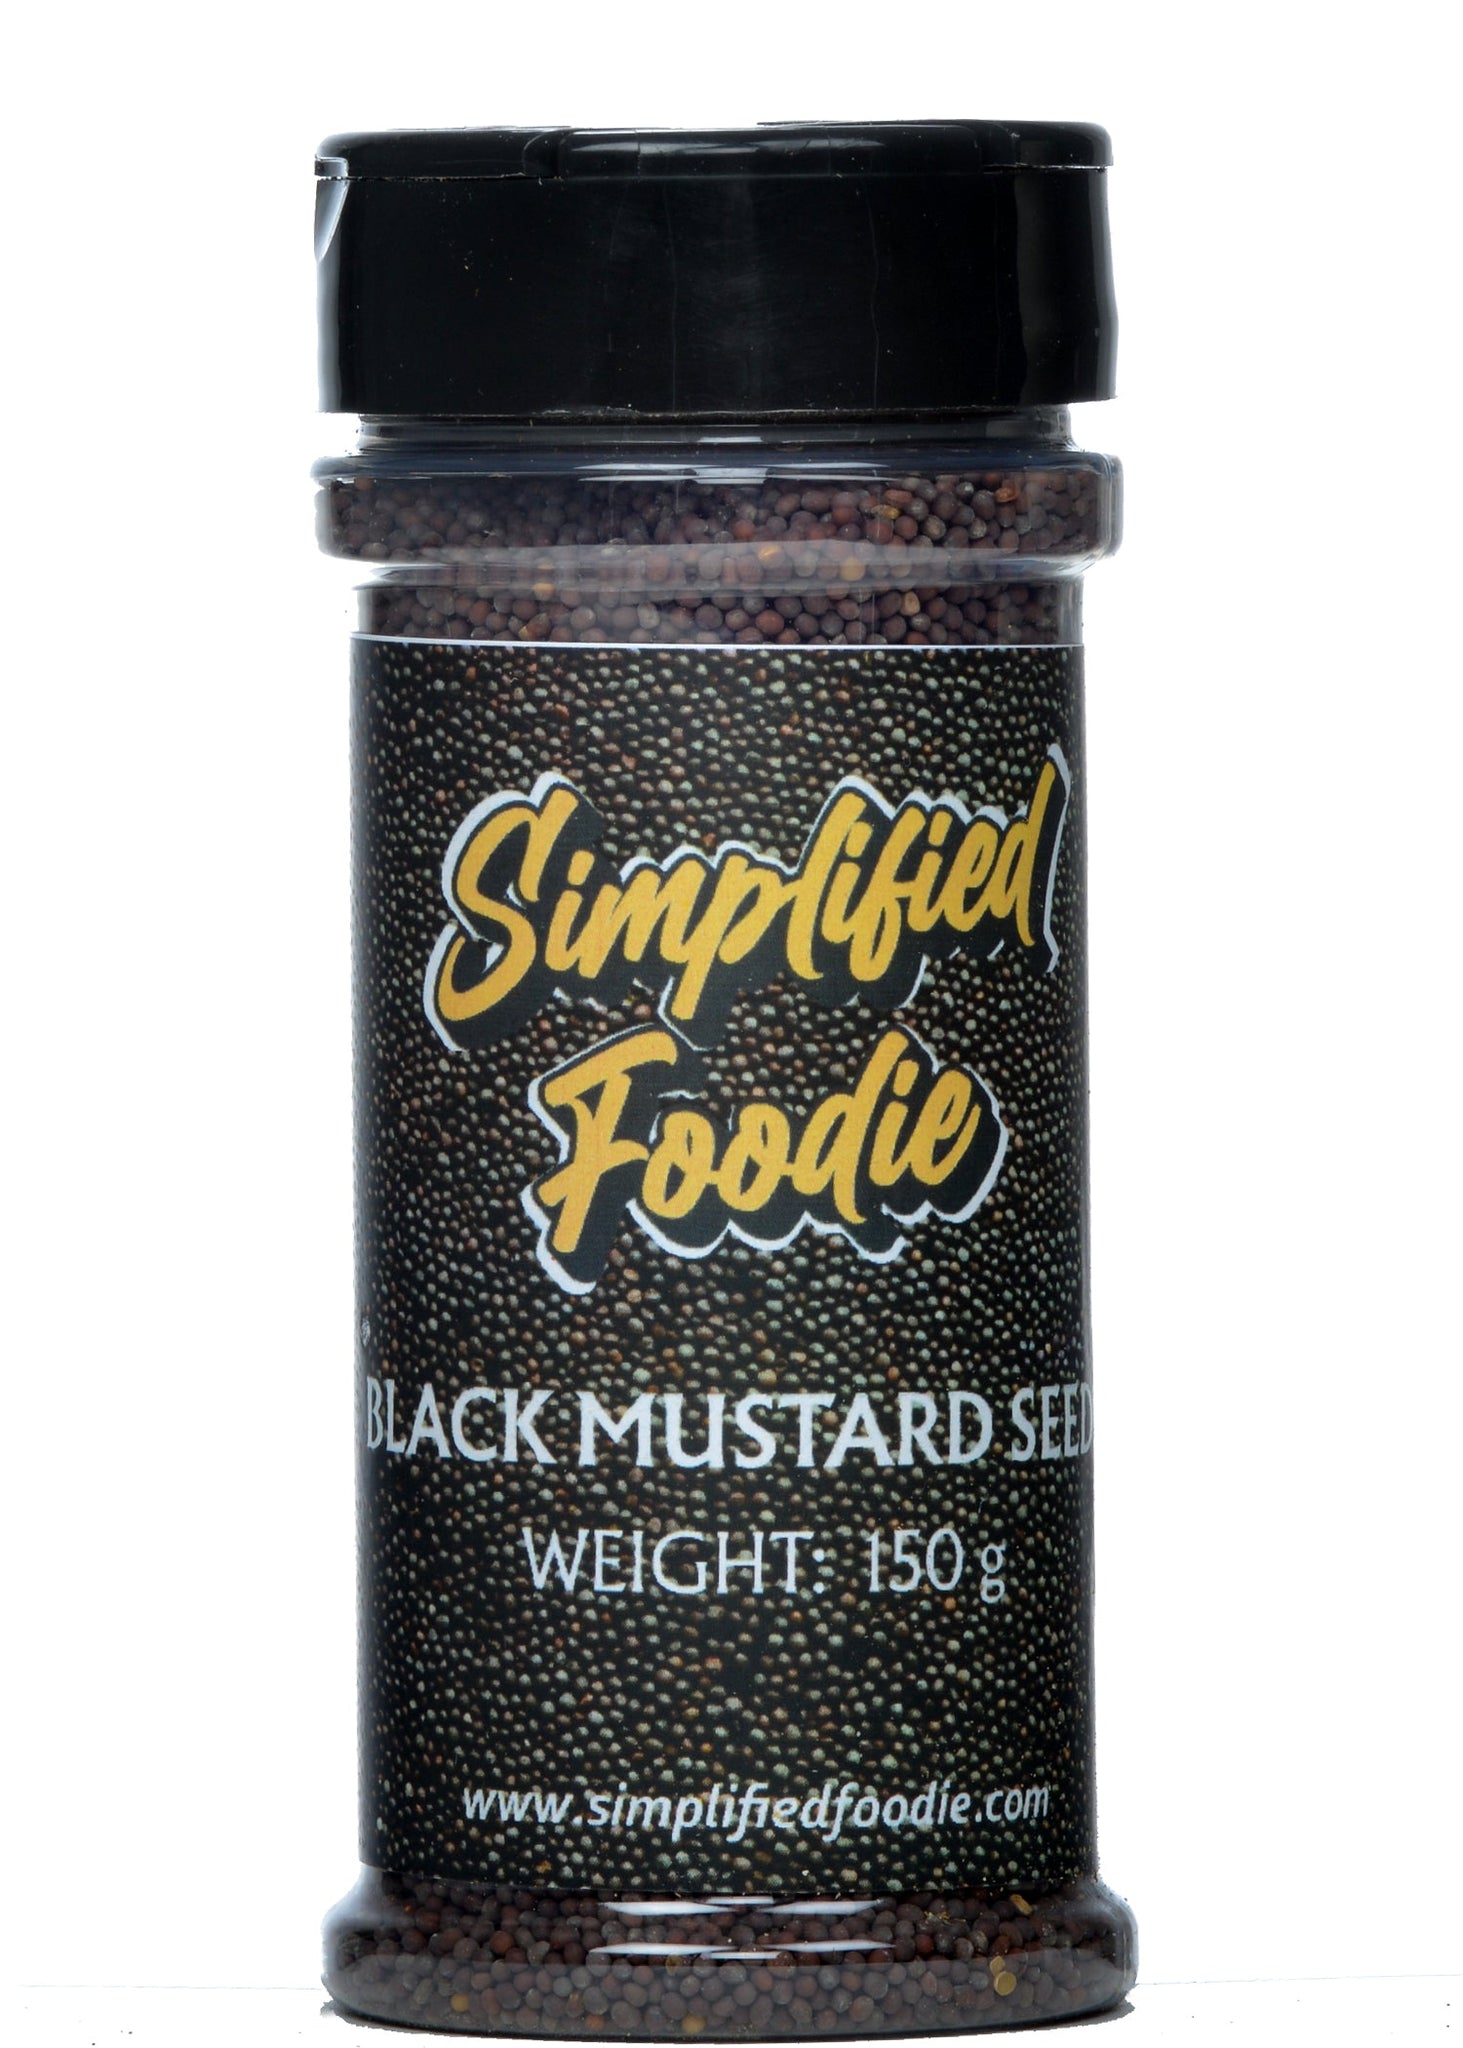 Black Mustard seeds 150g